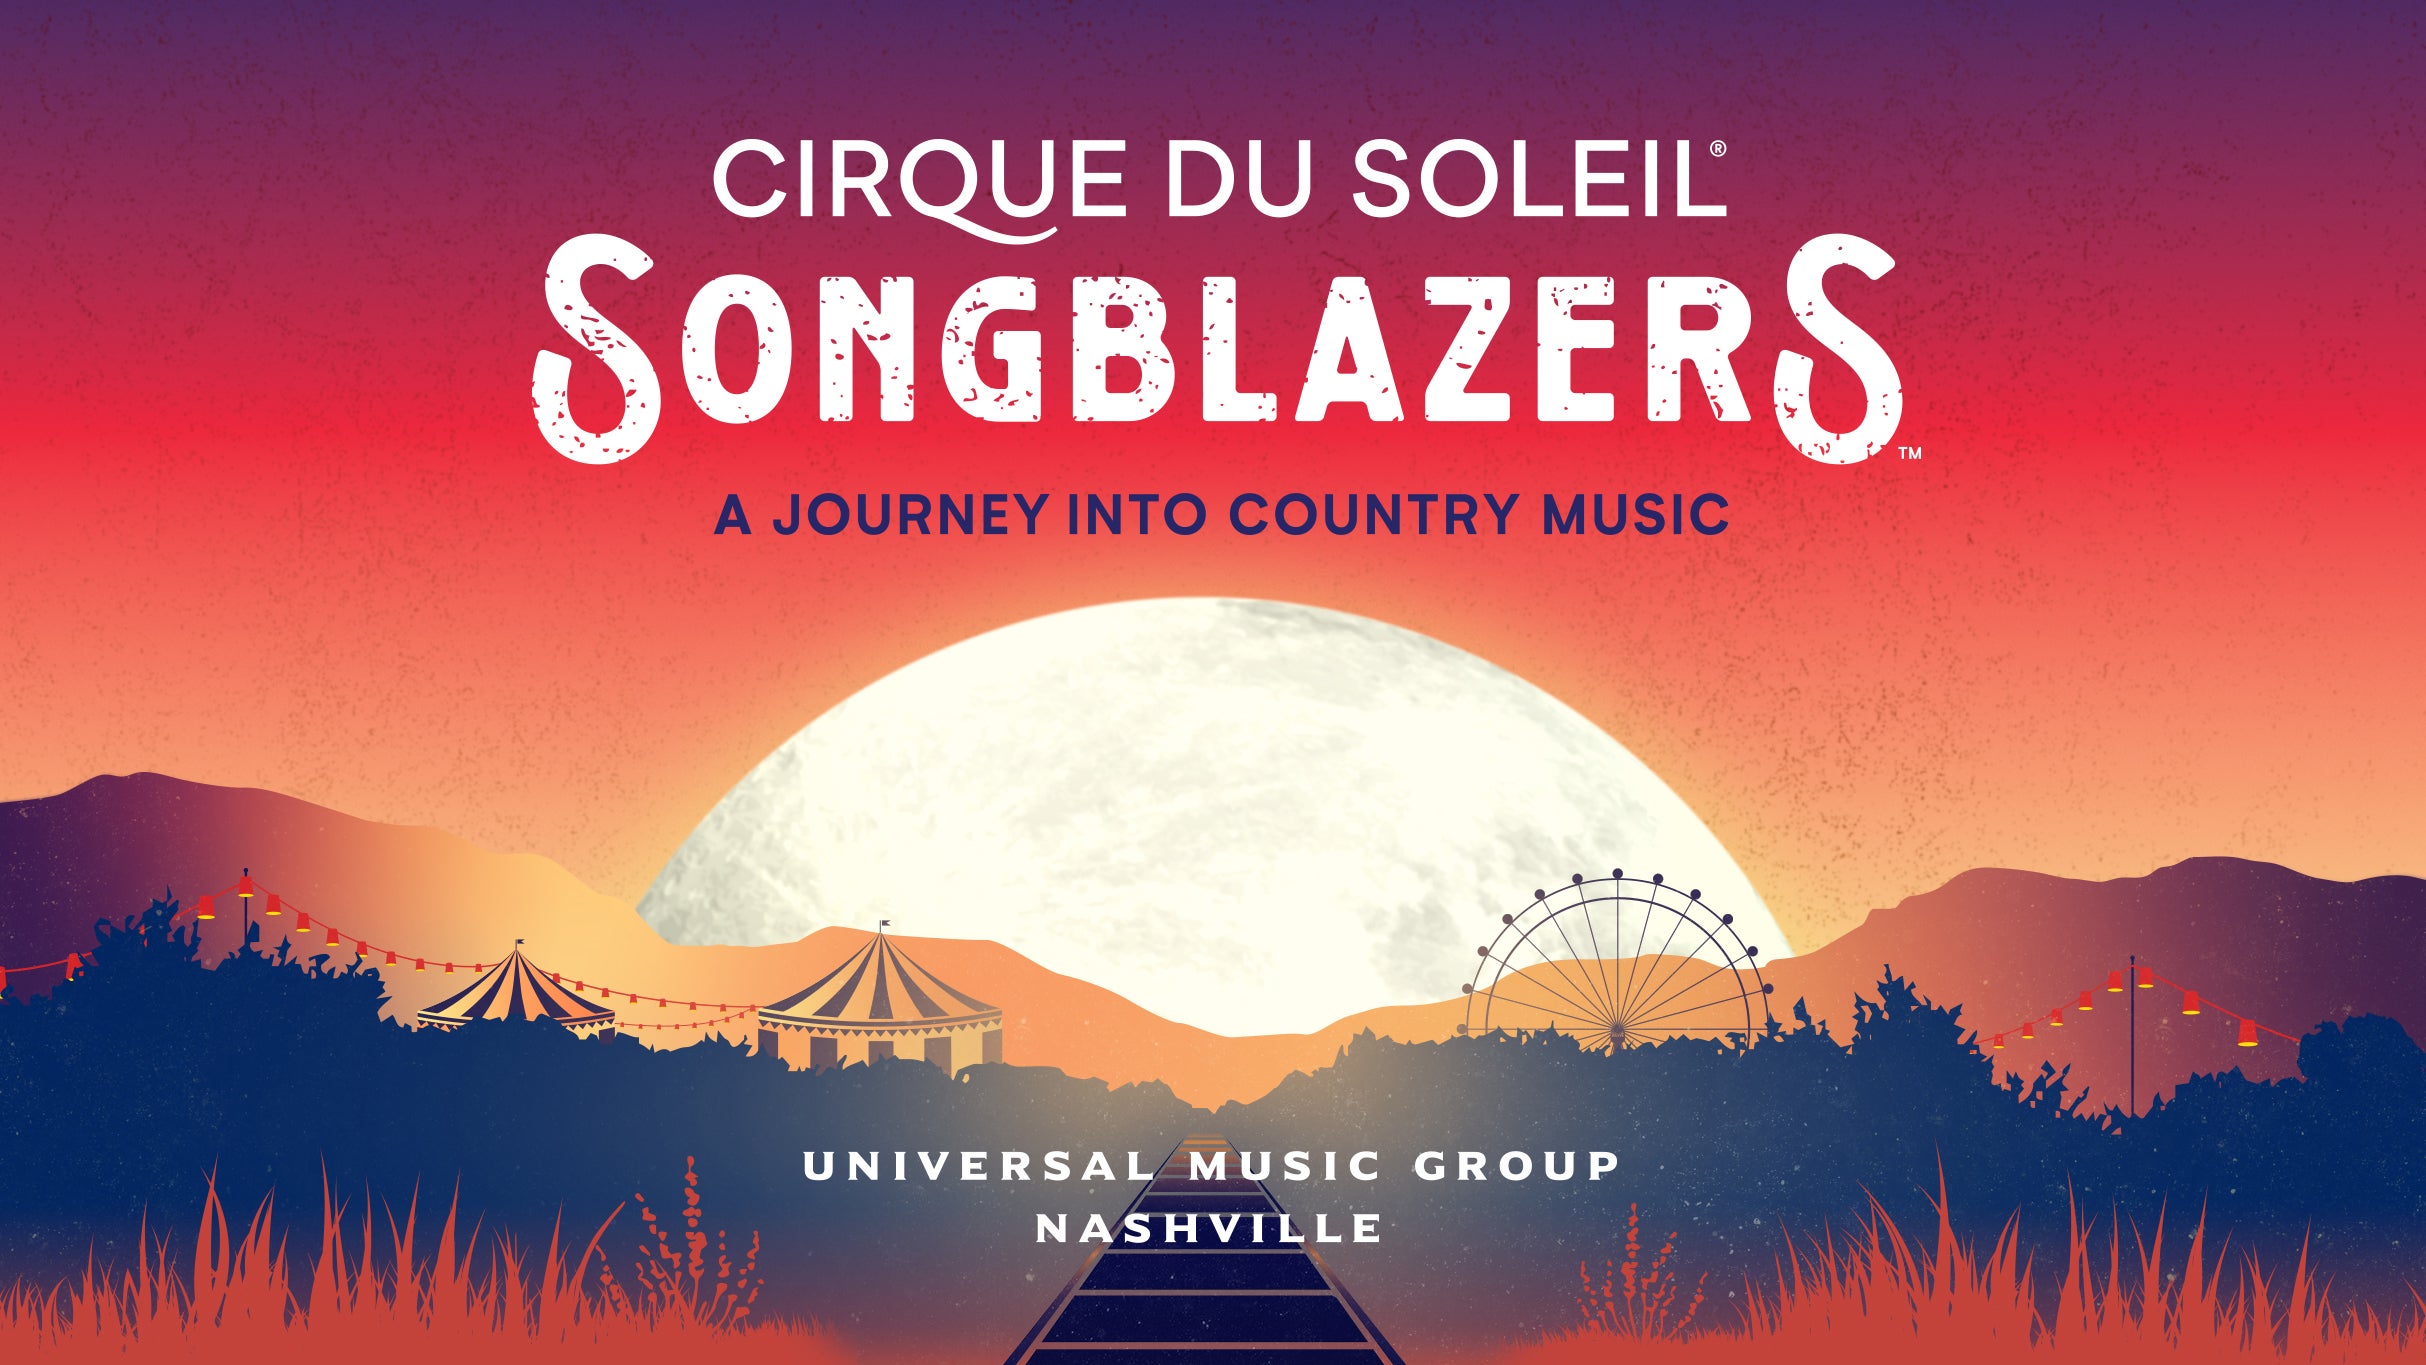 Cirque du Soleil: Songblazers in Birmingham promo photo for Cirque Club presale offer code